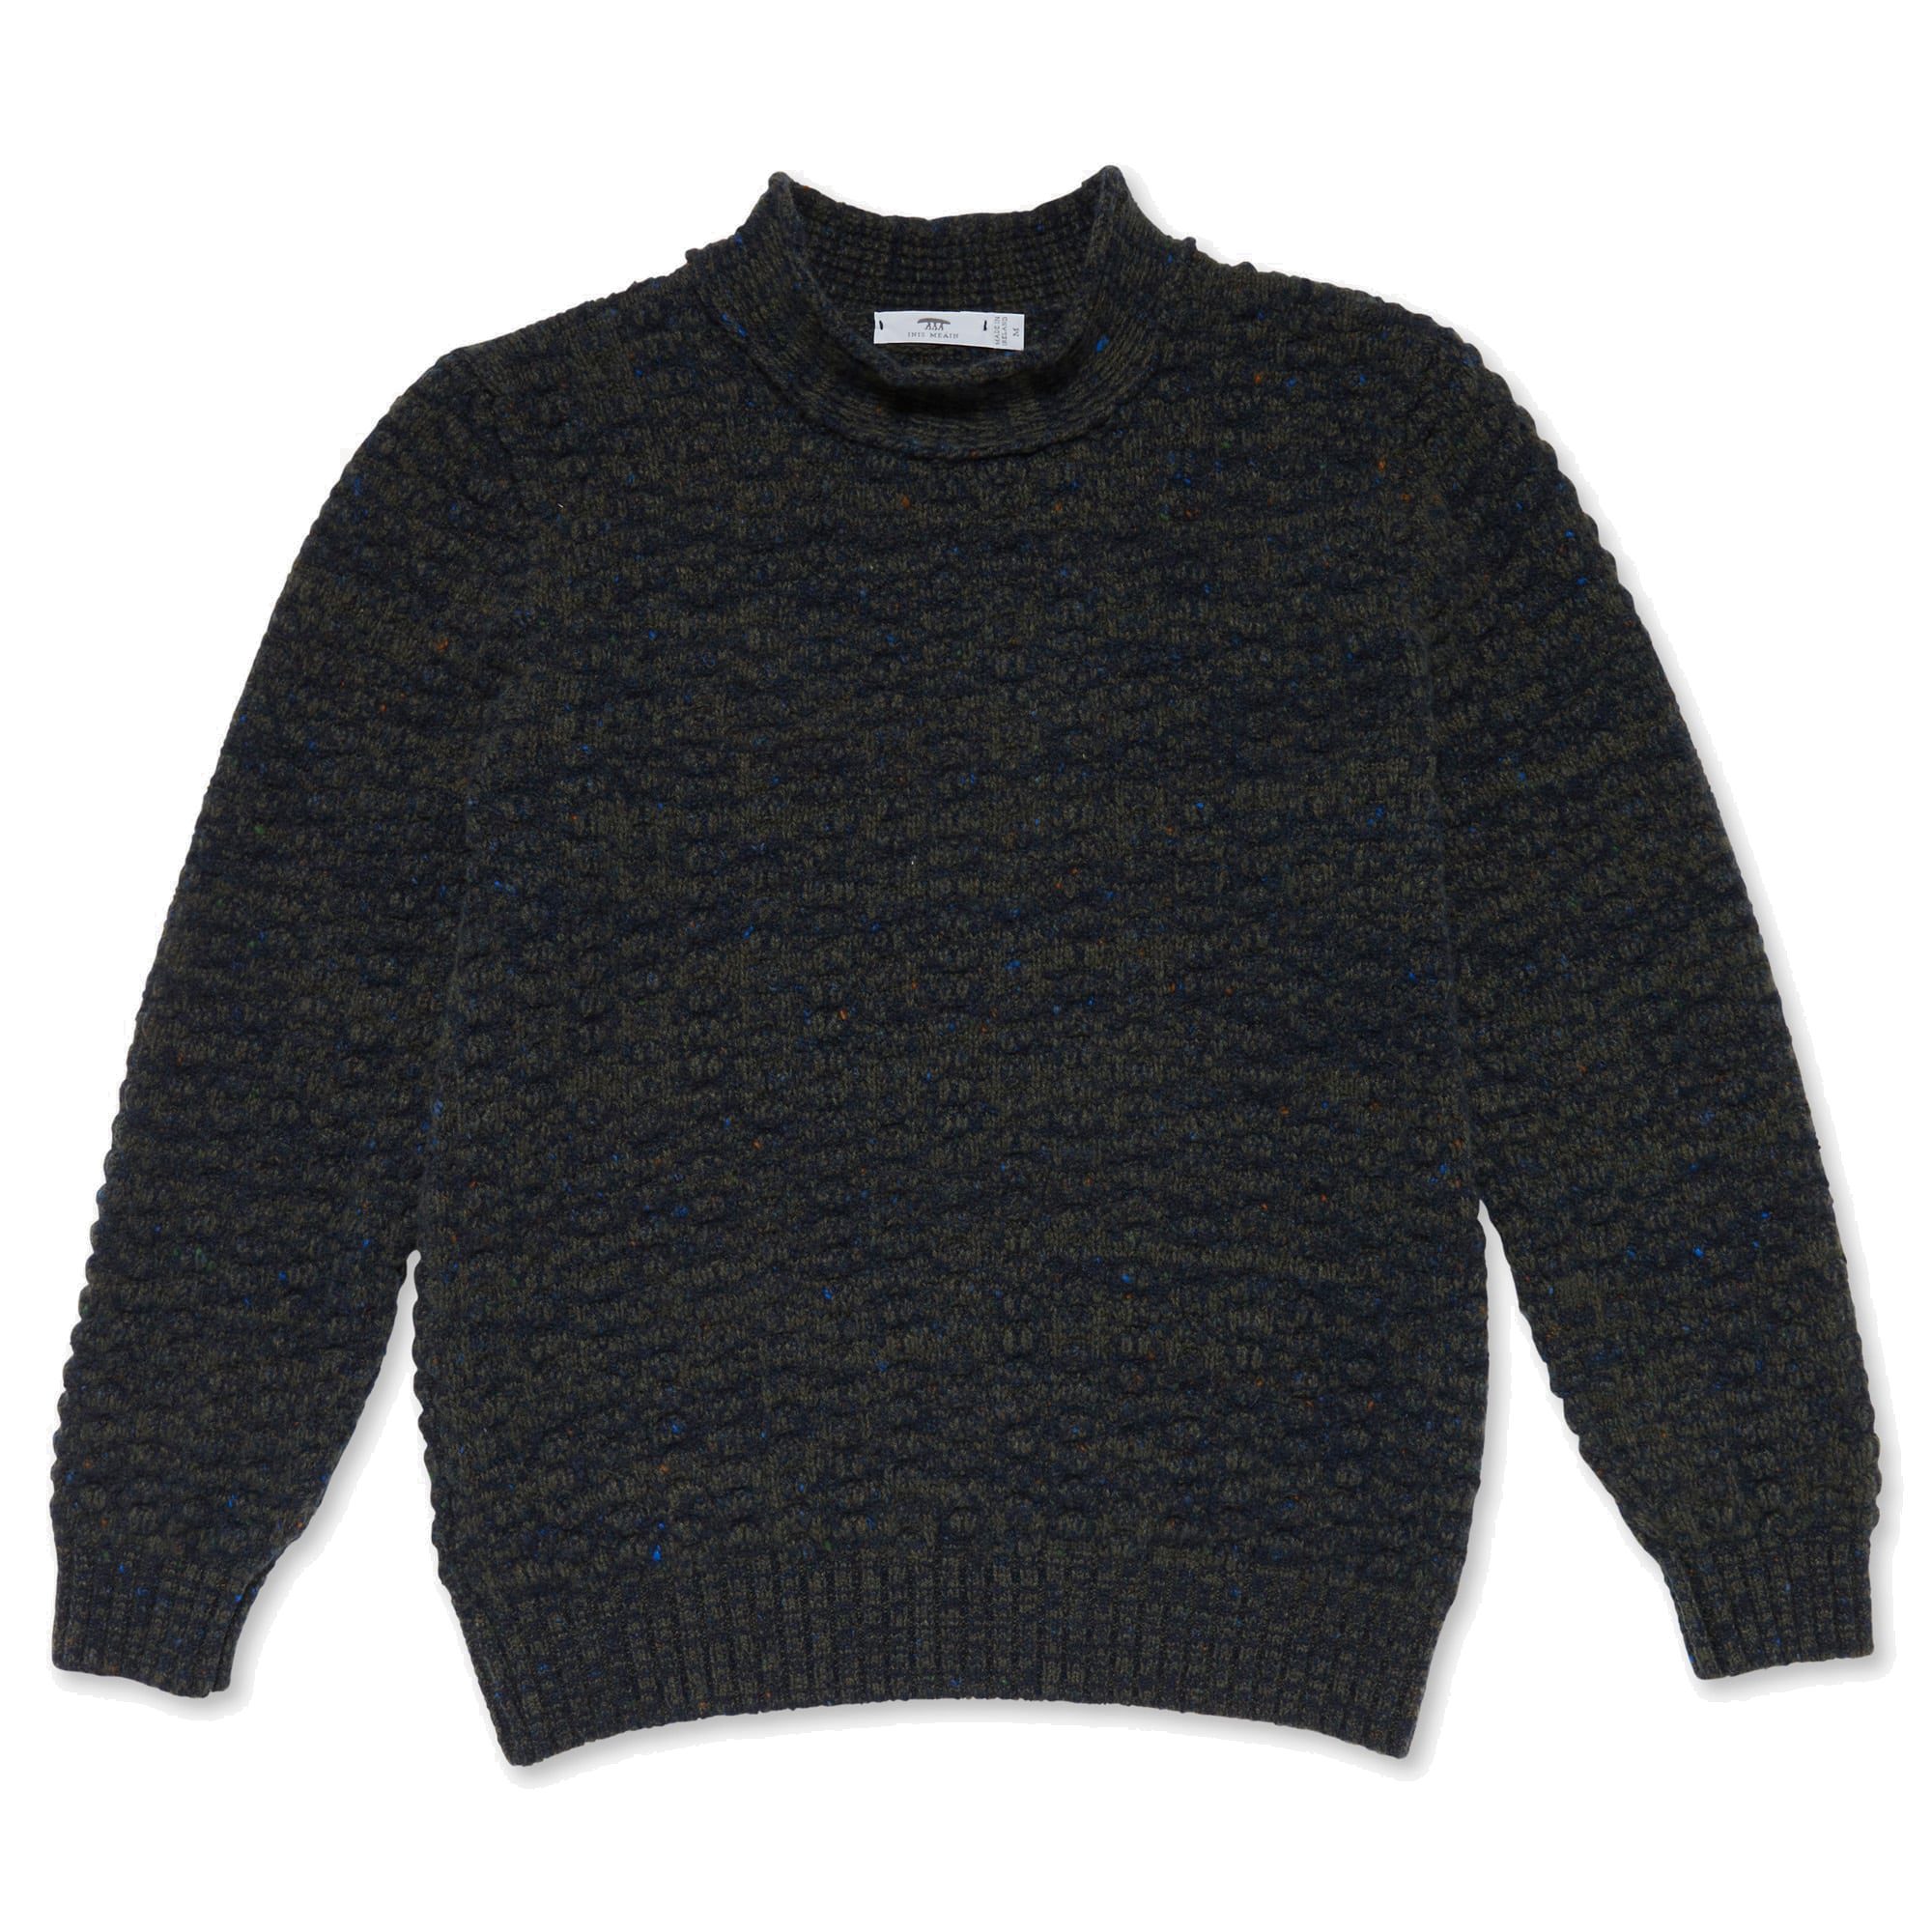 Autumn / Winter 2020 - Inis Meáin Knitting Co.